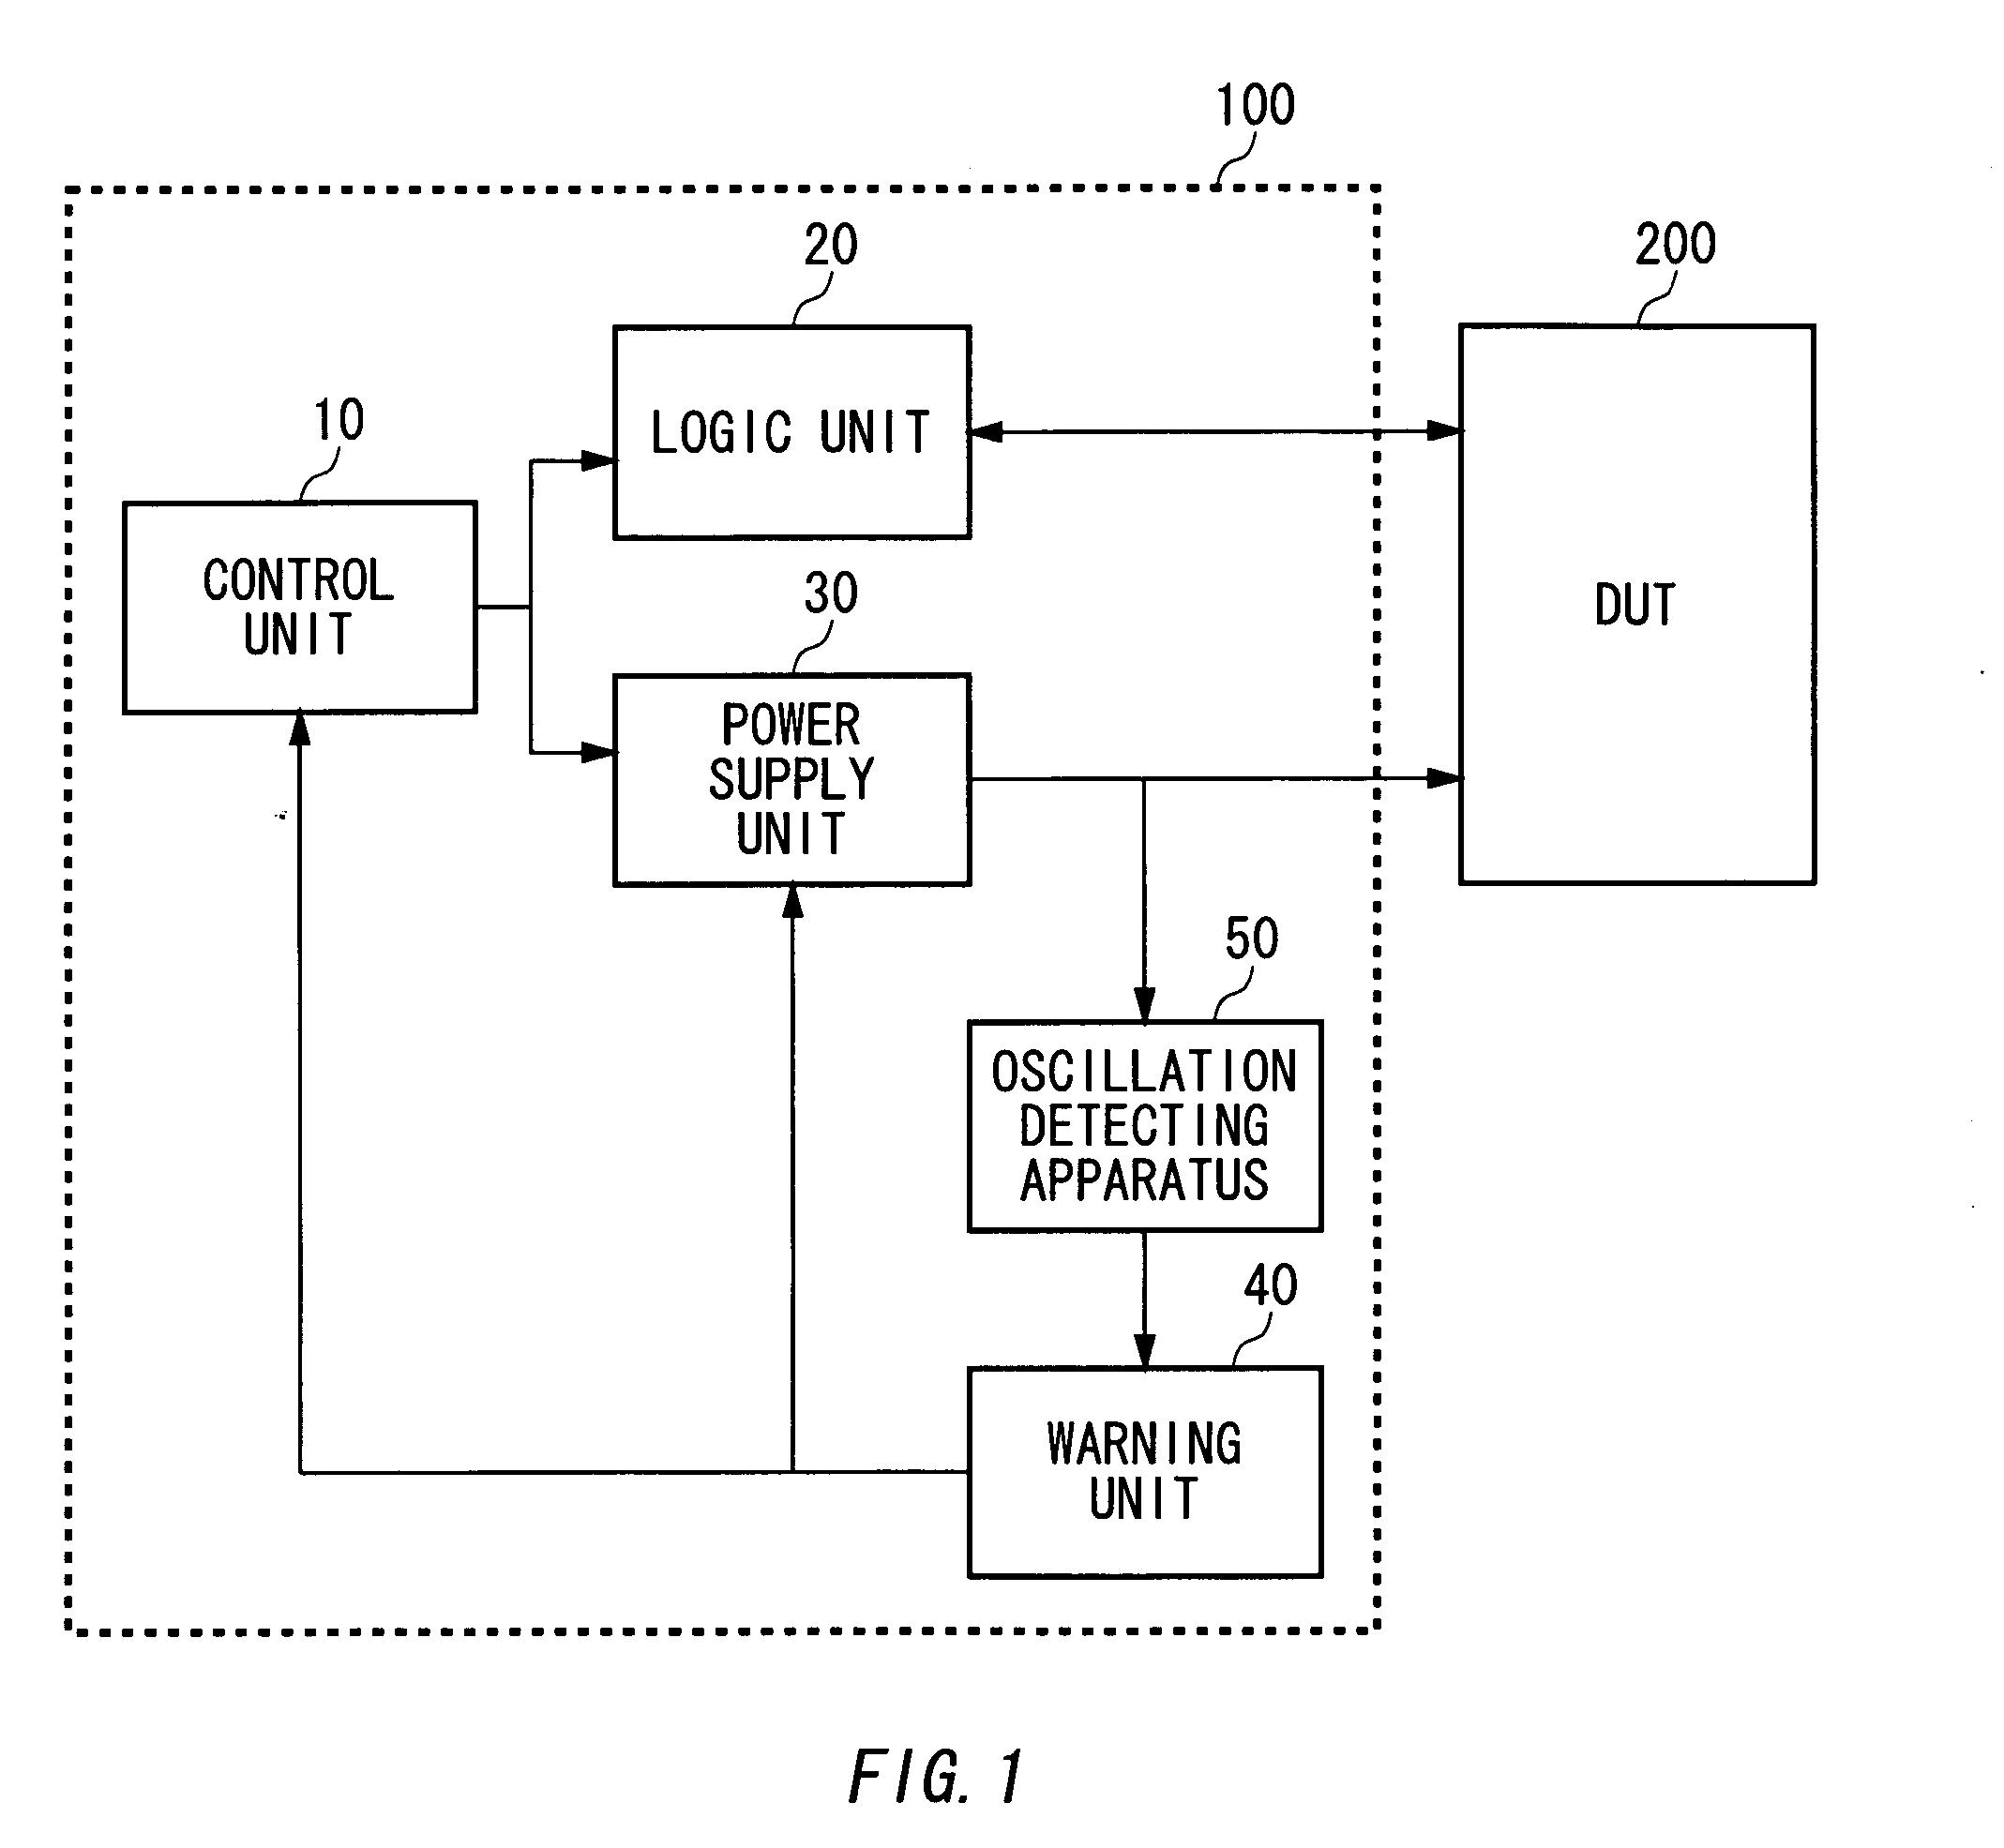 Oscillation detecting apparatus and test apparatus